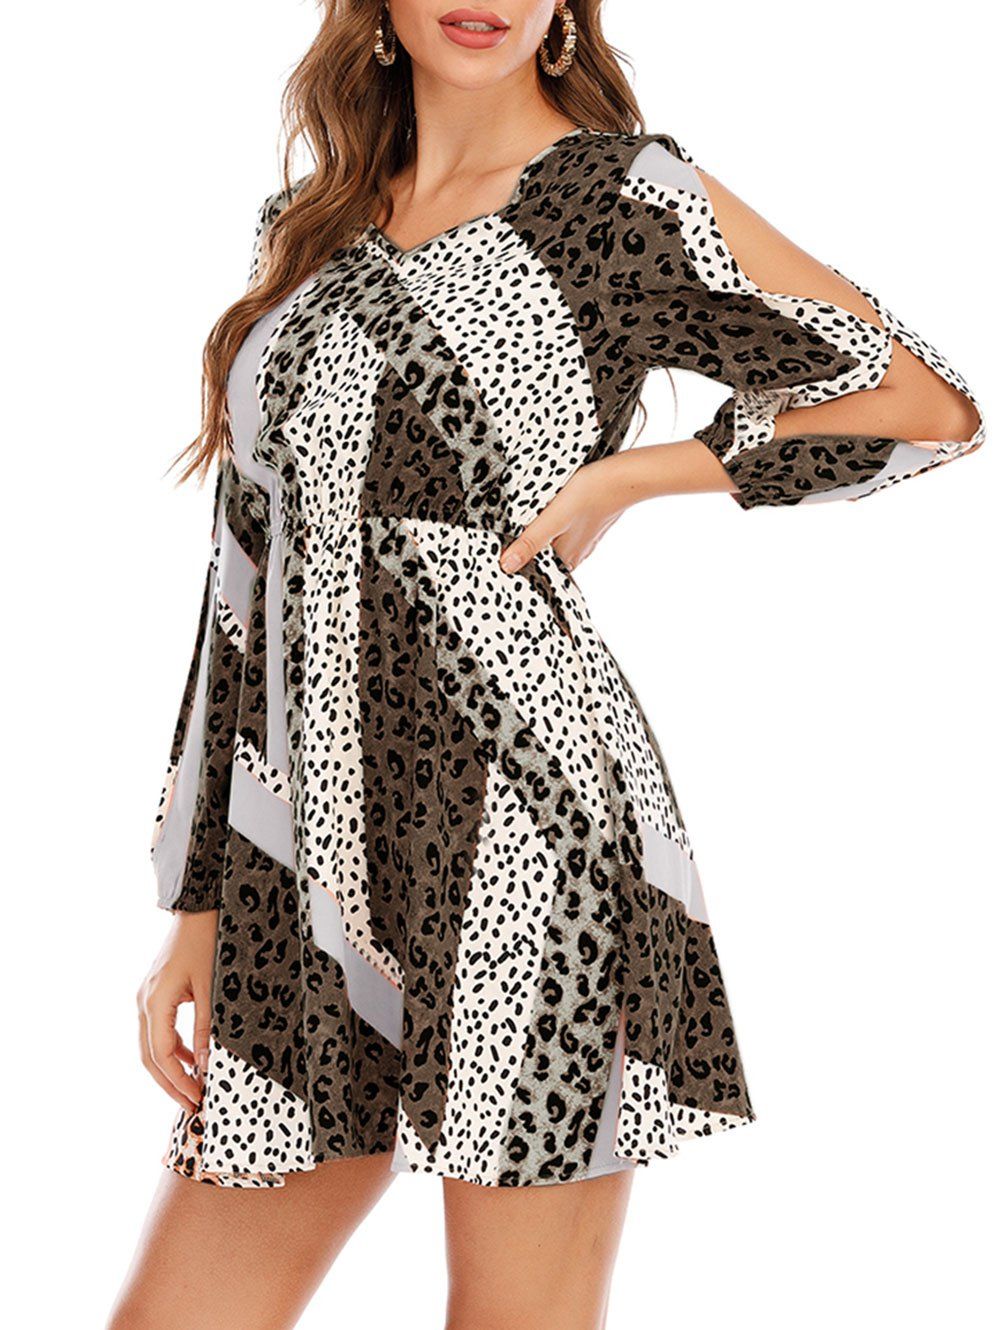 Leopard Dalmatian Dot Print Split Sleeve Mini Dress - LIGHT GRAY S